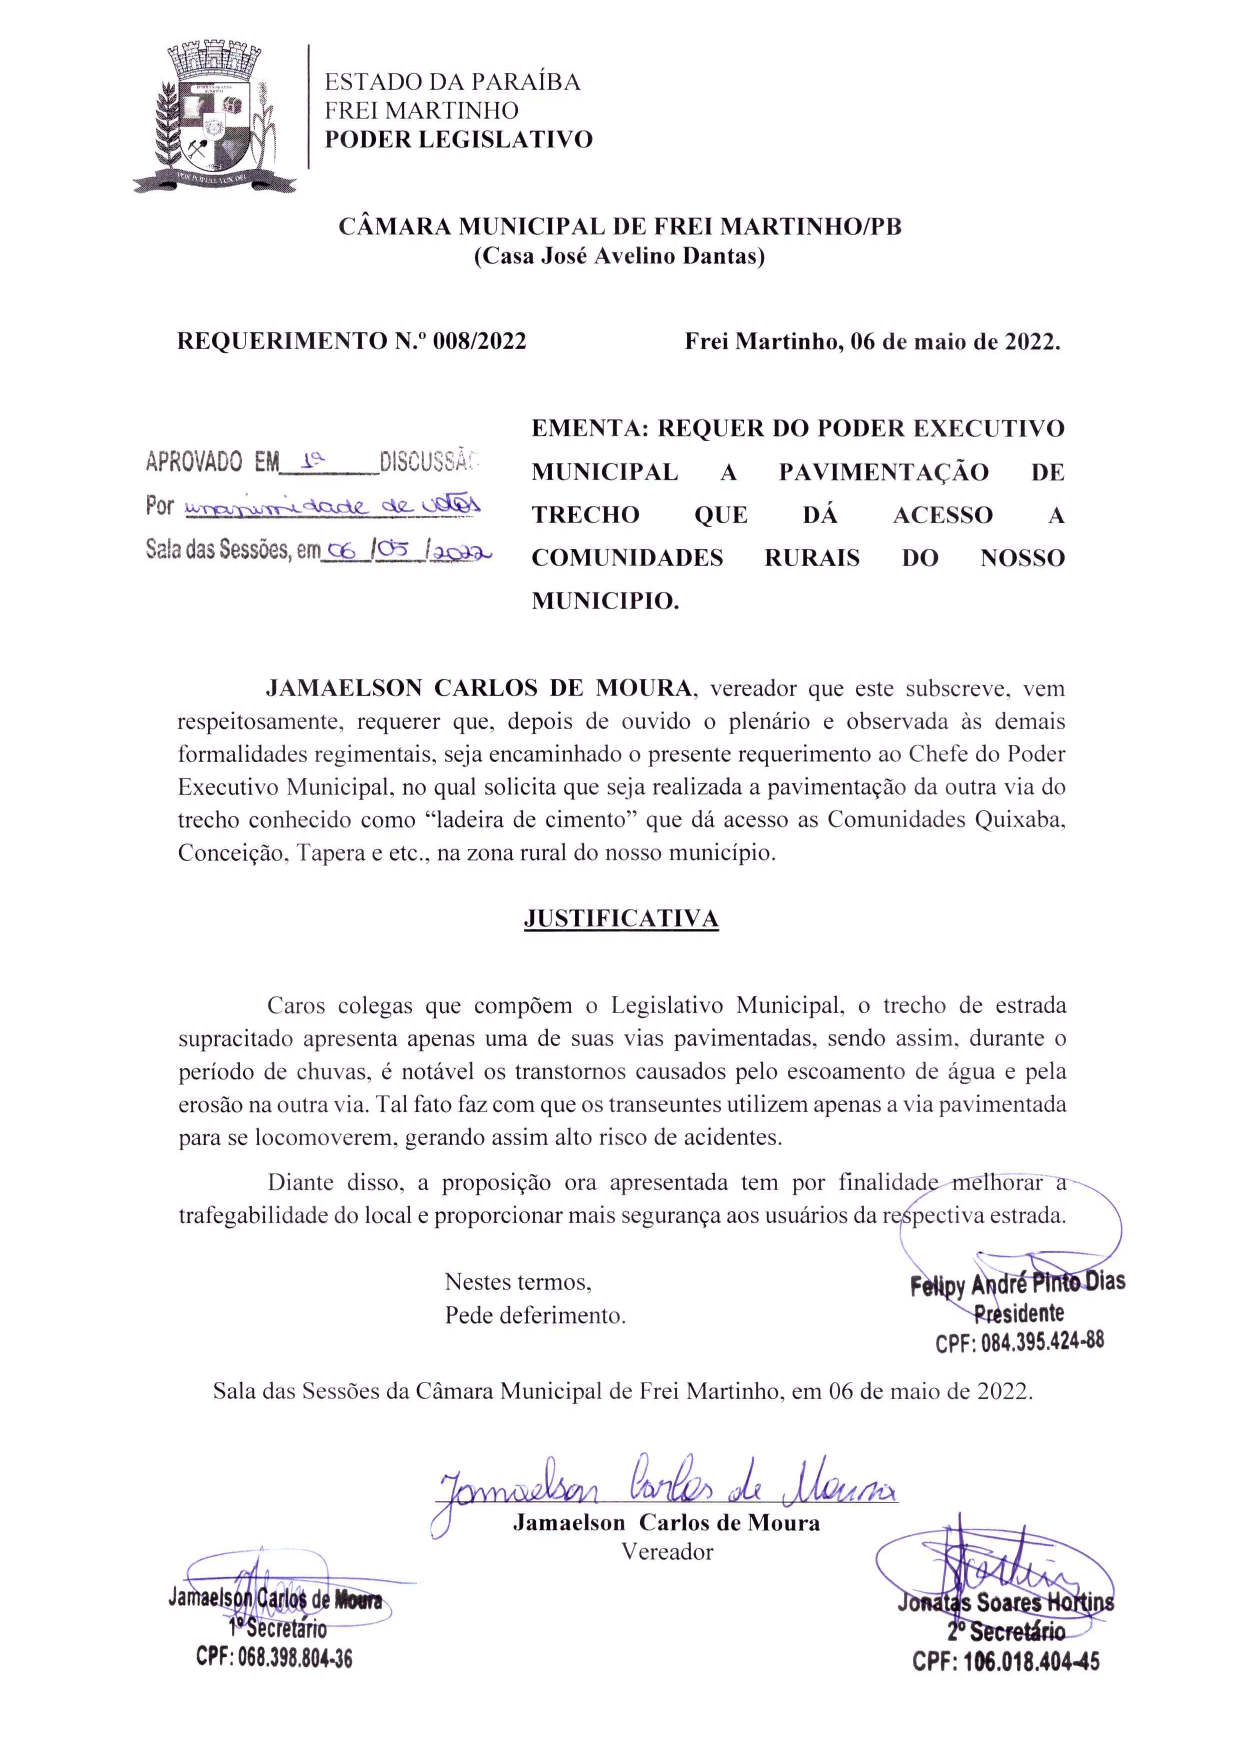 Requerimento 008/2022 - Vereador Jamaelson Carlos de Moura